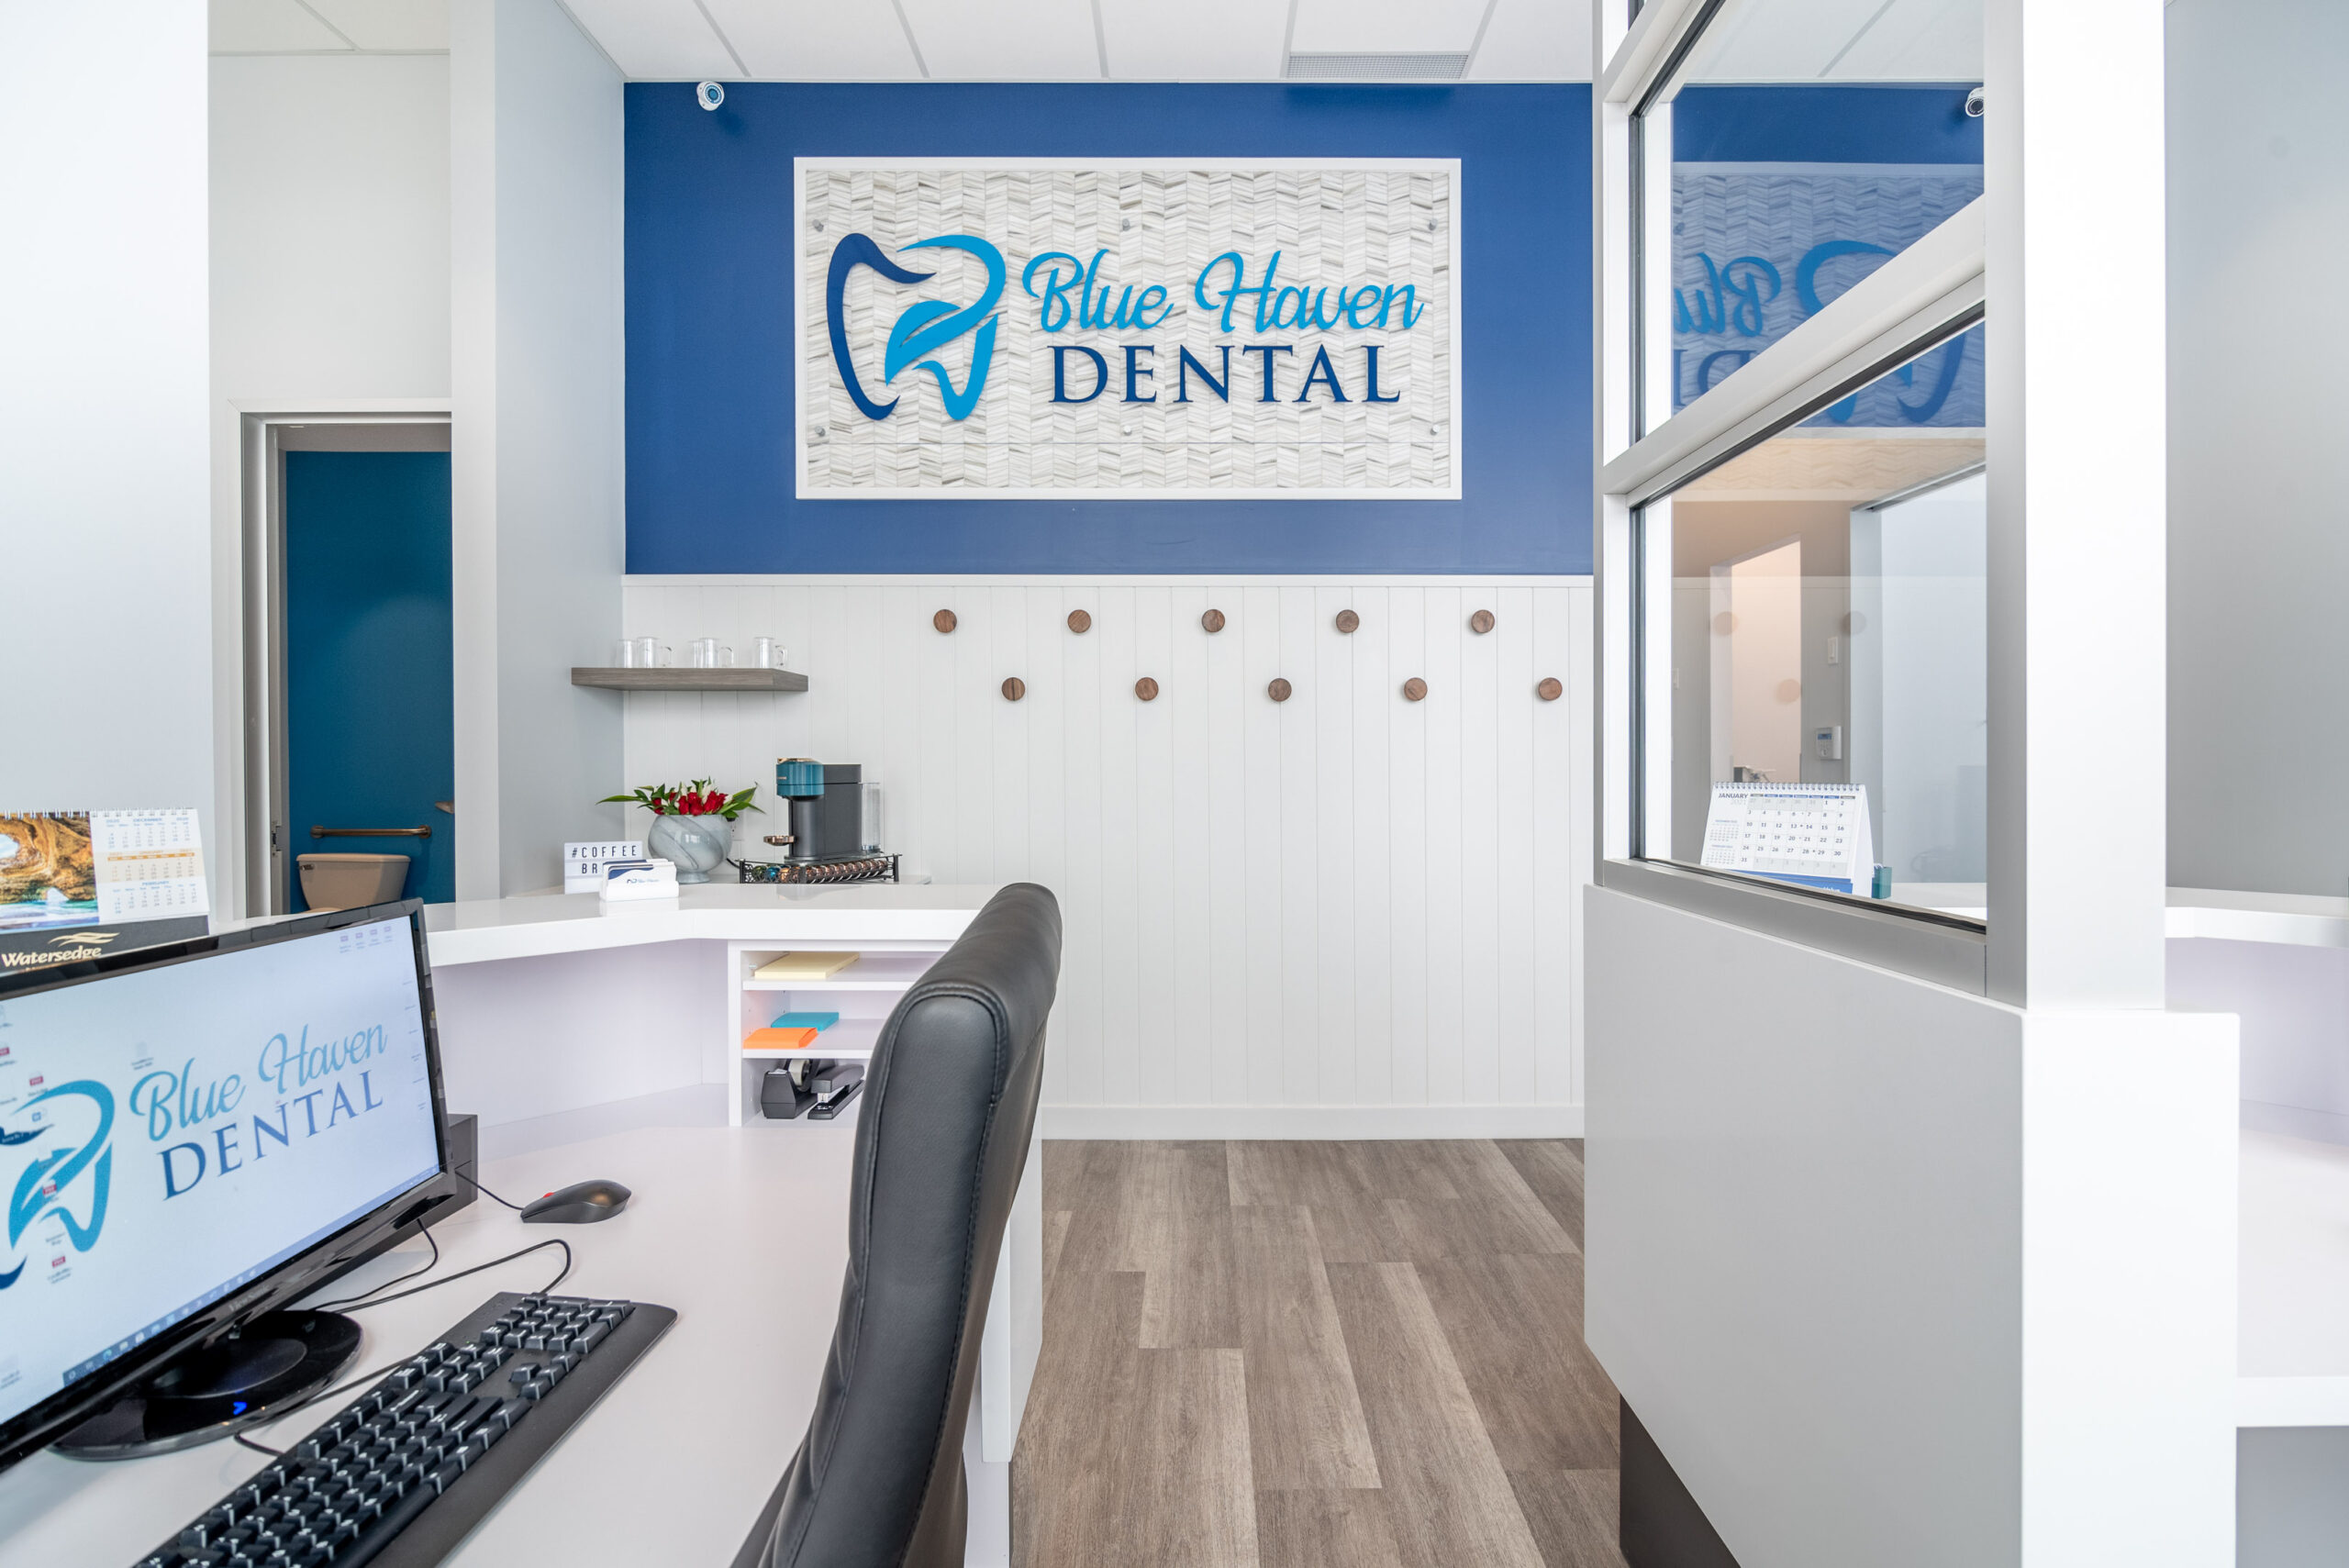 Blue Haven Dental's reception area